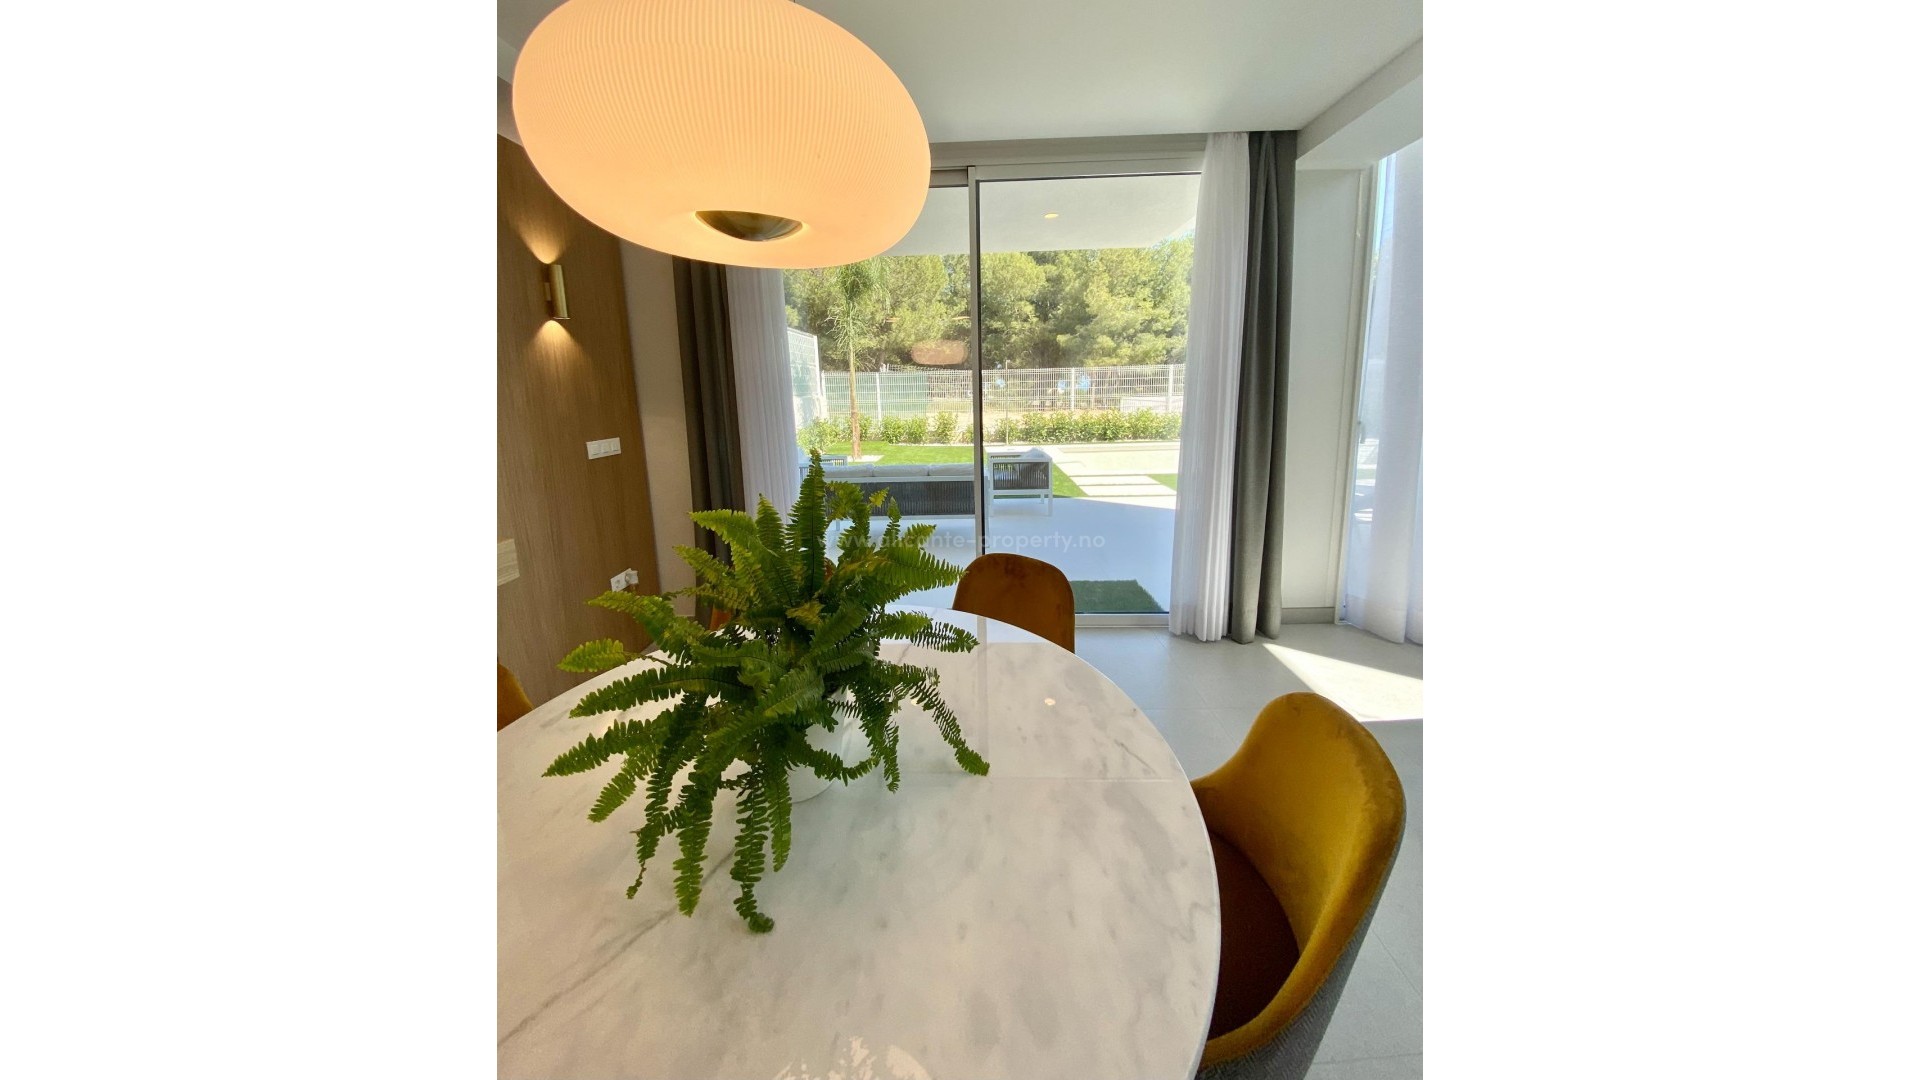 Minimalist design villas in Sierra Cortina in Finestrat, 3 bedrooms, 3 bathrooms, private pool and large terraces. Location near Benidorm, Costa Blanca